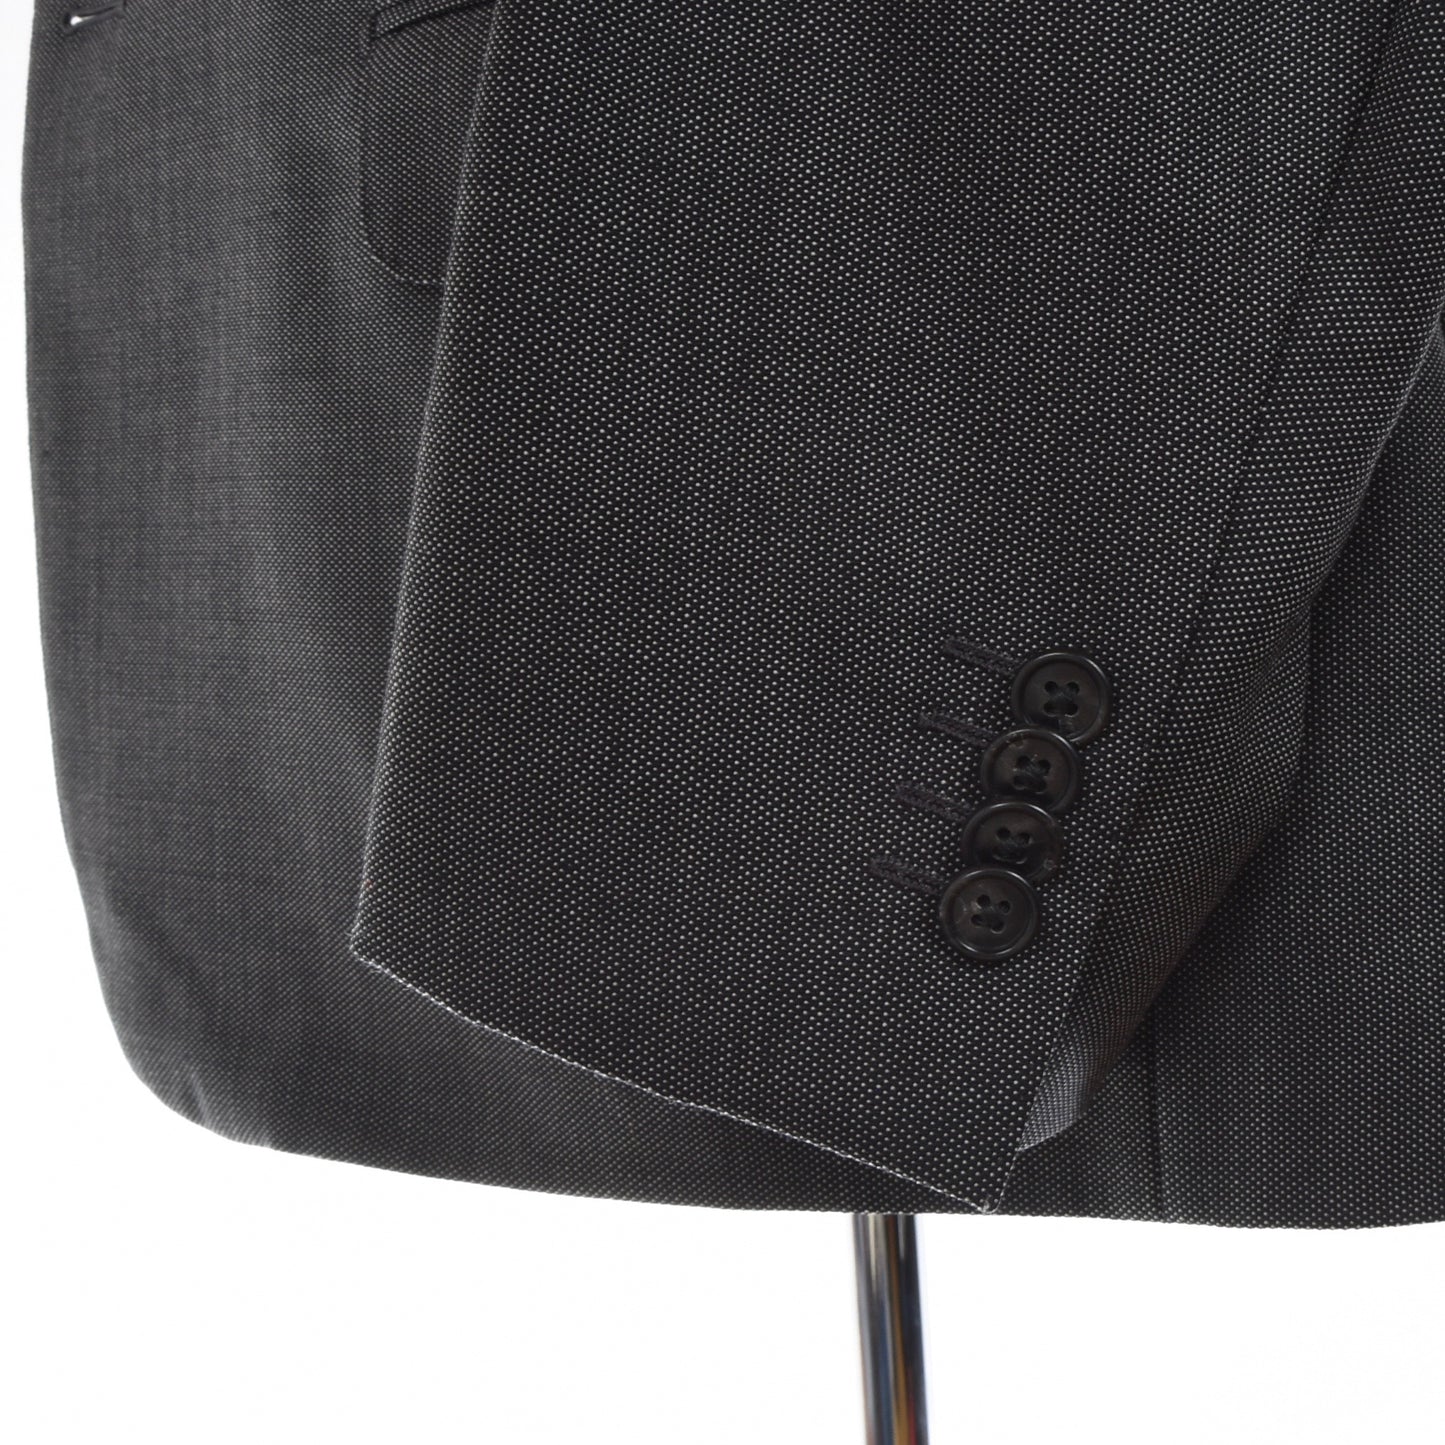 Corneliani Nailhead Wool Suit Size 54 - Charcoal